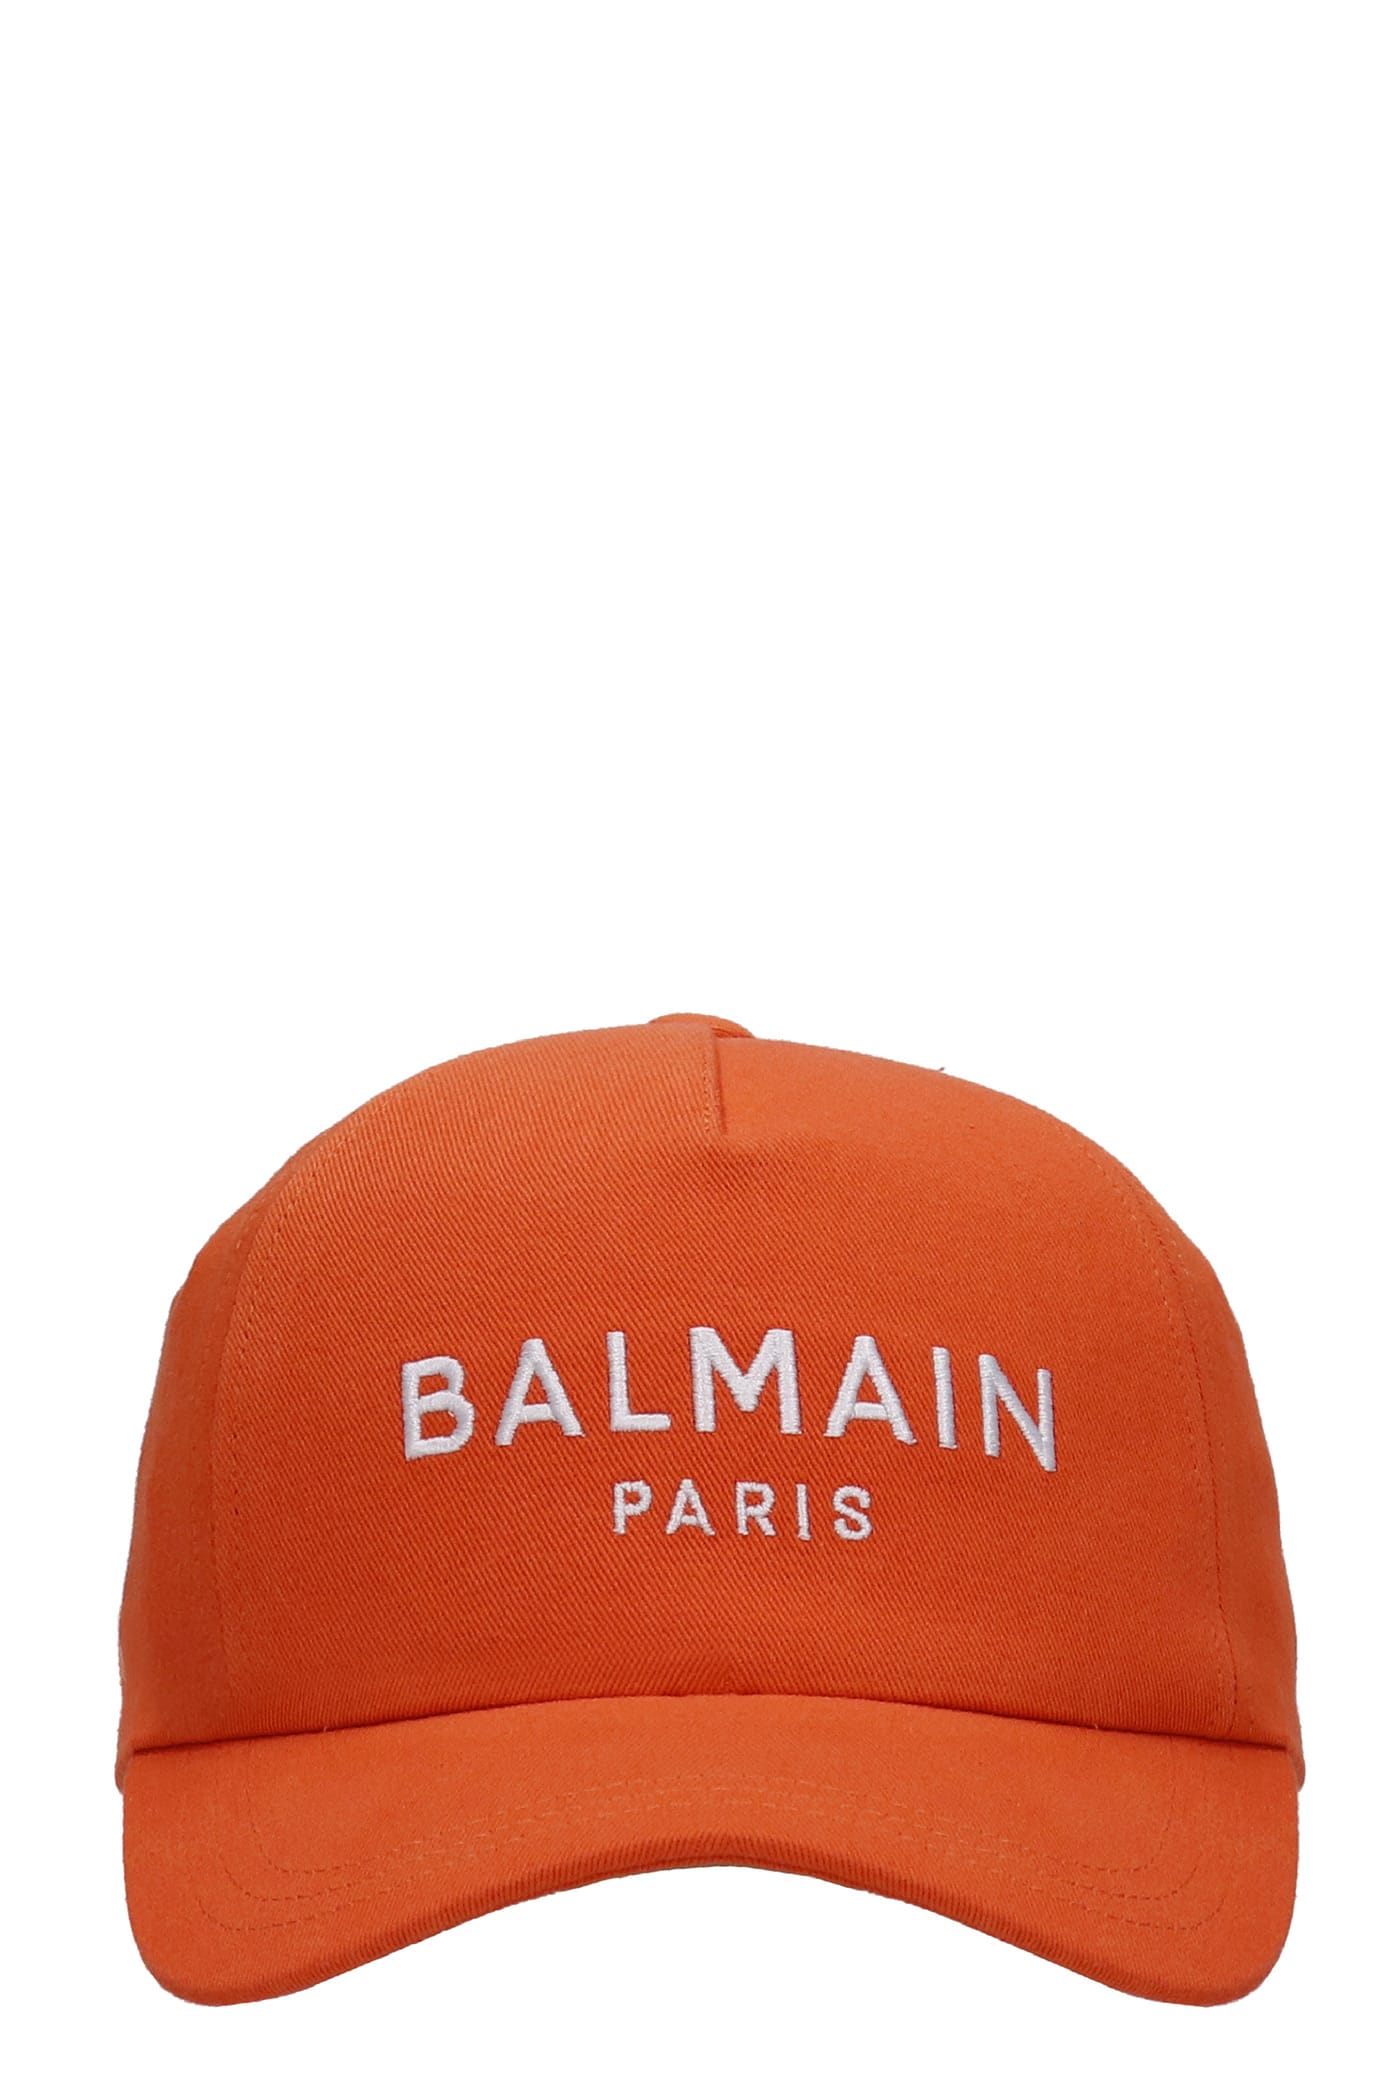 Balmain Hats In Orange Cotton